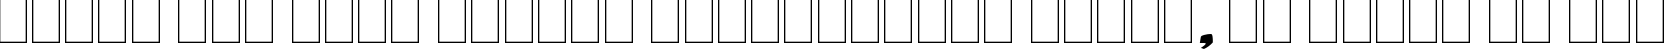 Пример написания шрифтом Arriba Arriba LET Plain:1.0 текста на русском